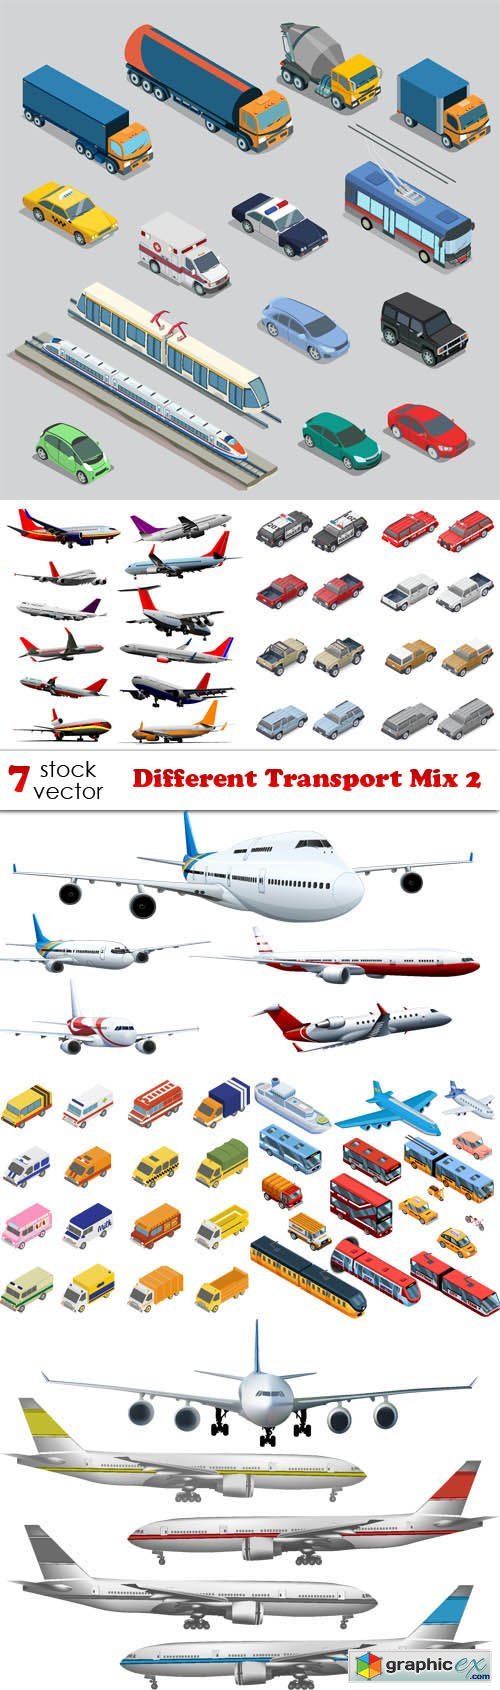 Different Transport Mix 2